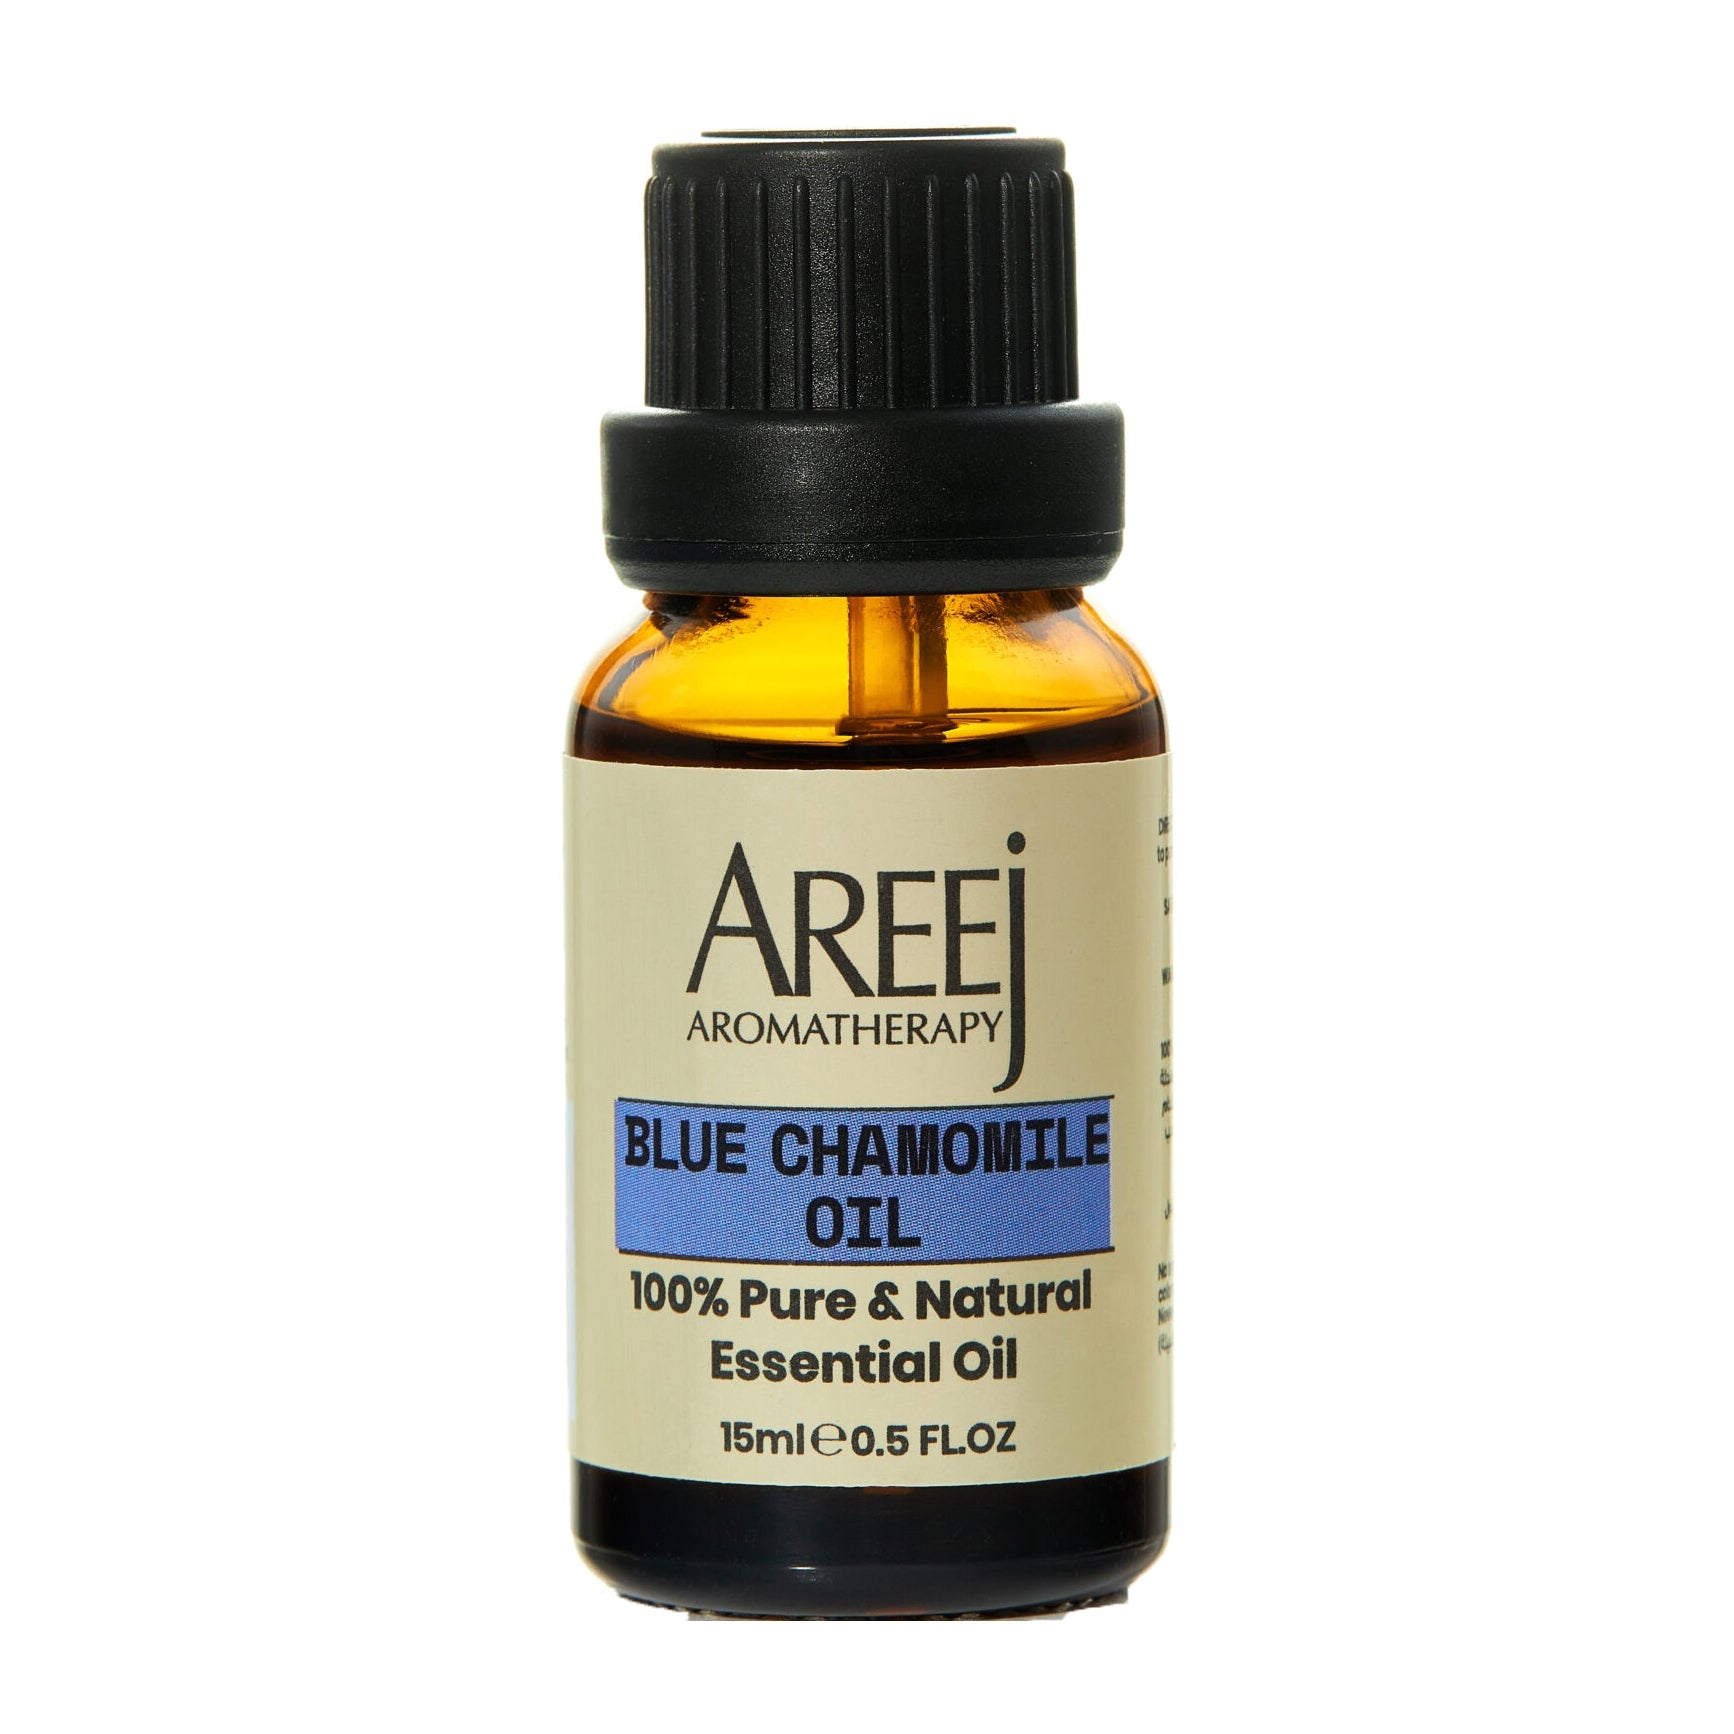 Areej Blue Chamomile Essential Oil - 15ml - Bloom Pharmacy